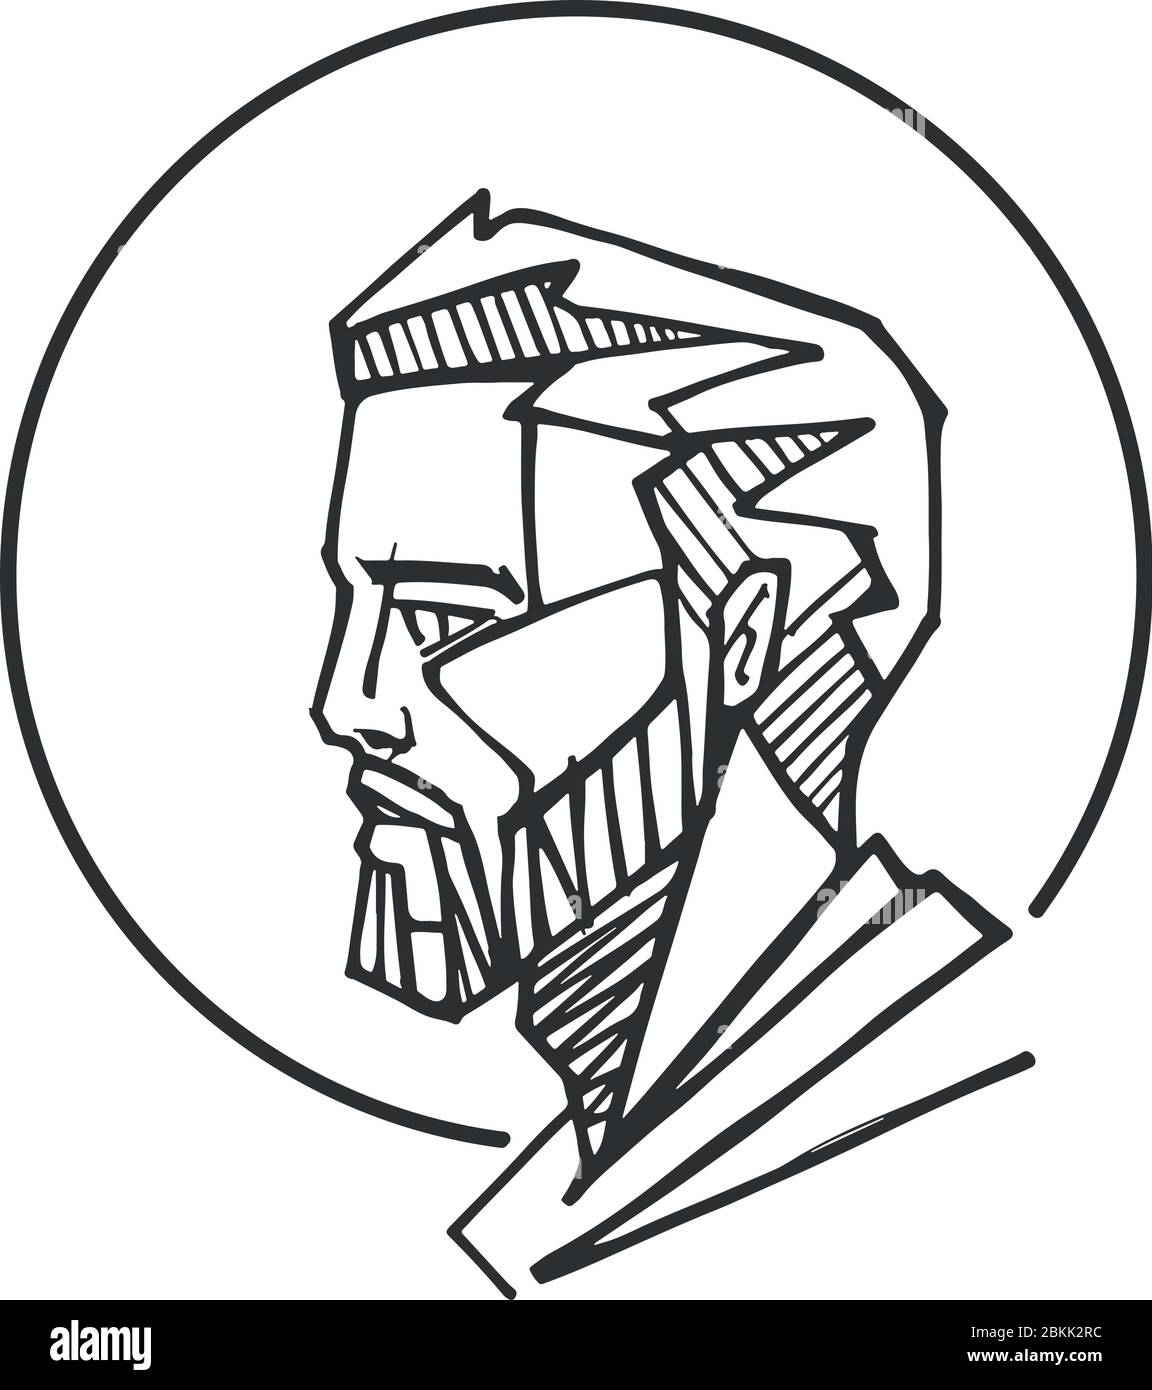 Digital illustration or drawing of Saint Joseph face Stock Vector